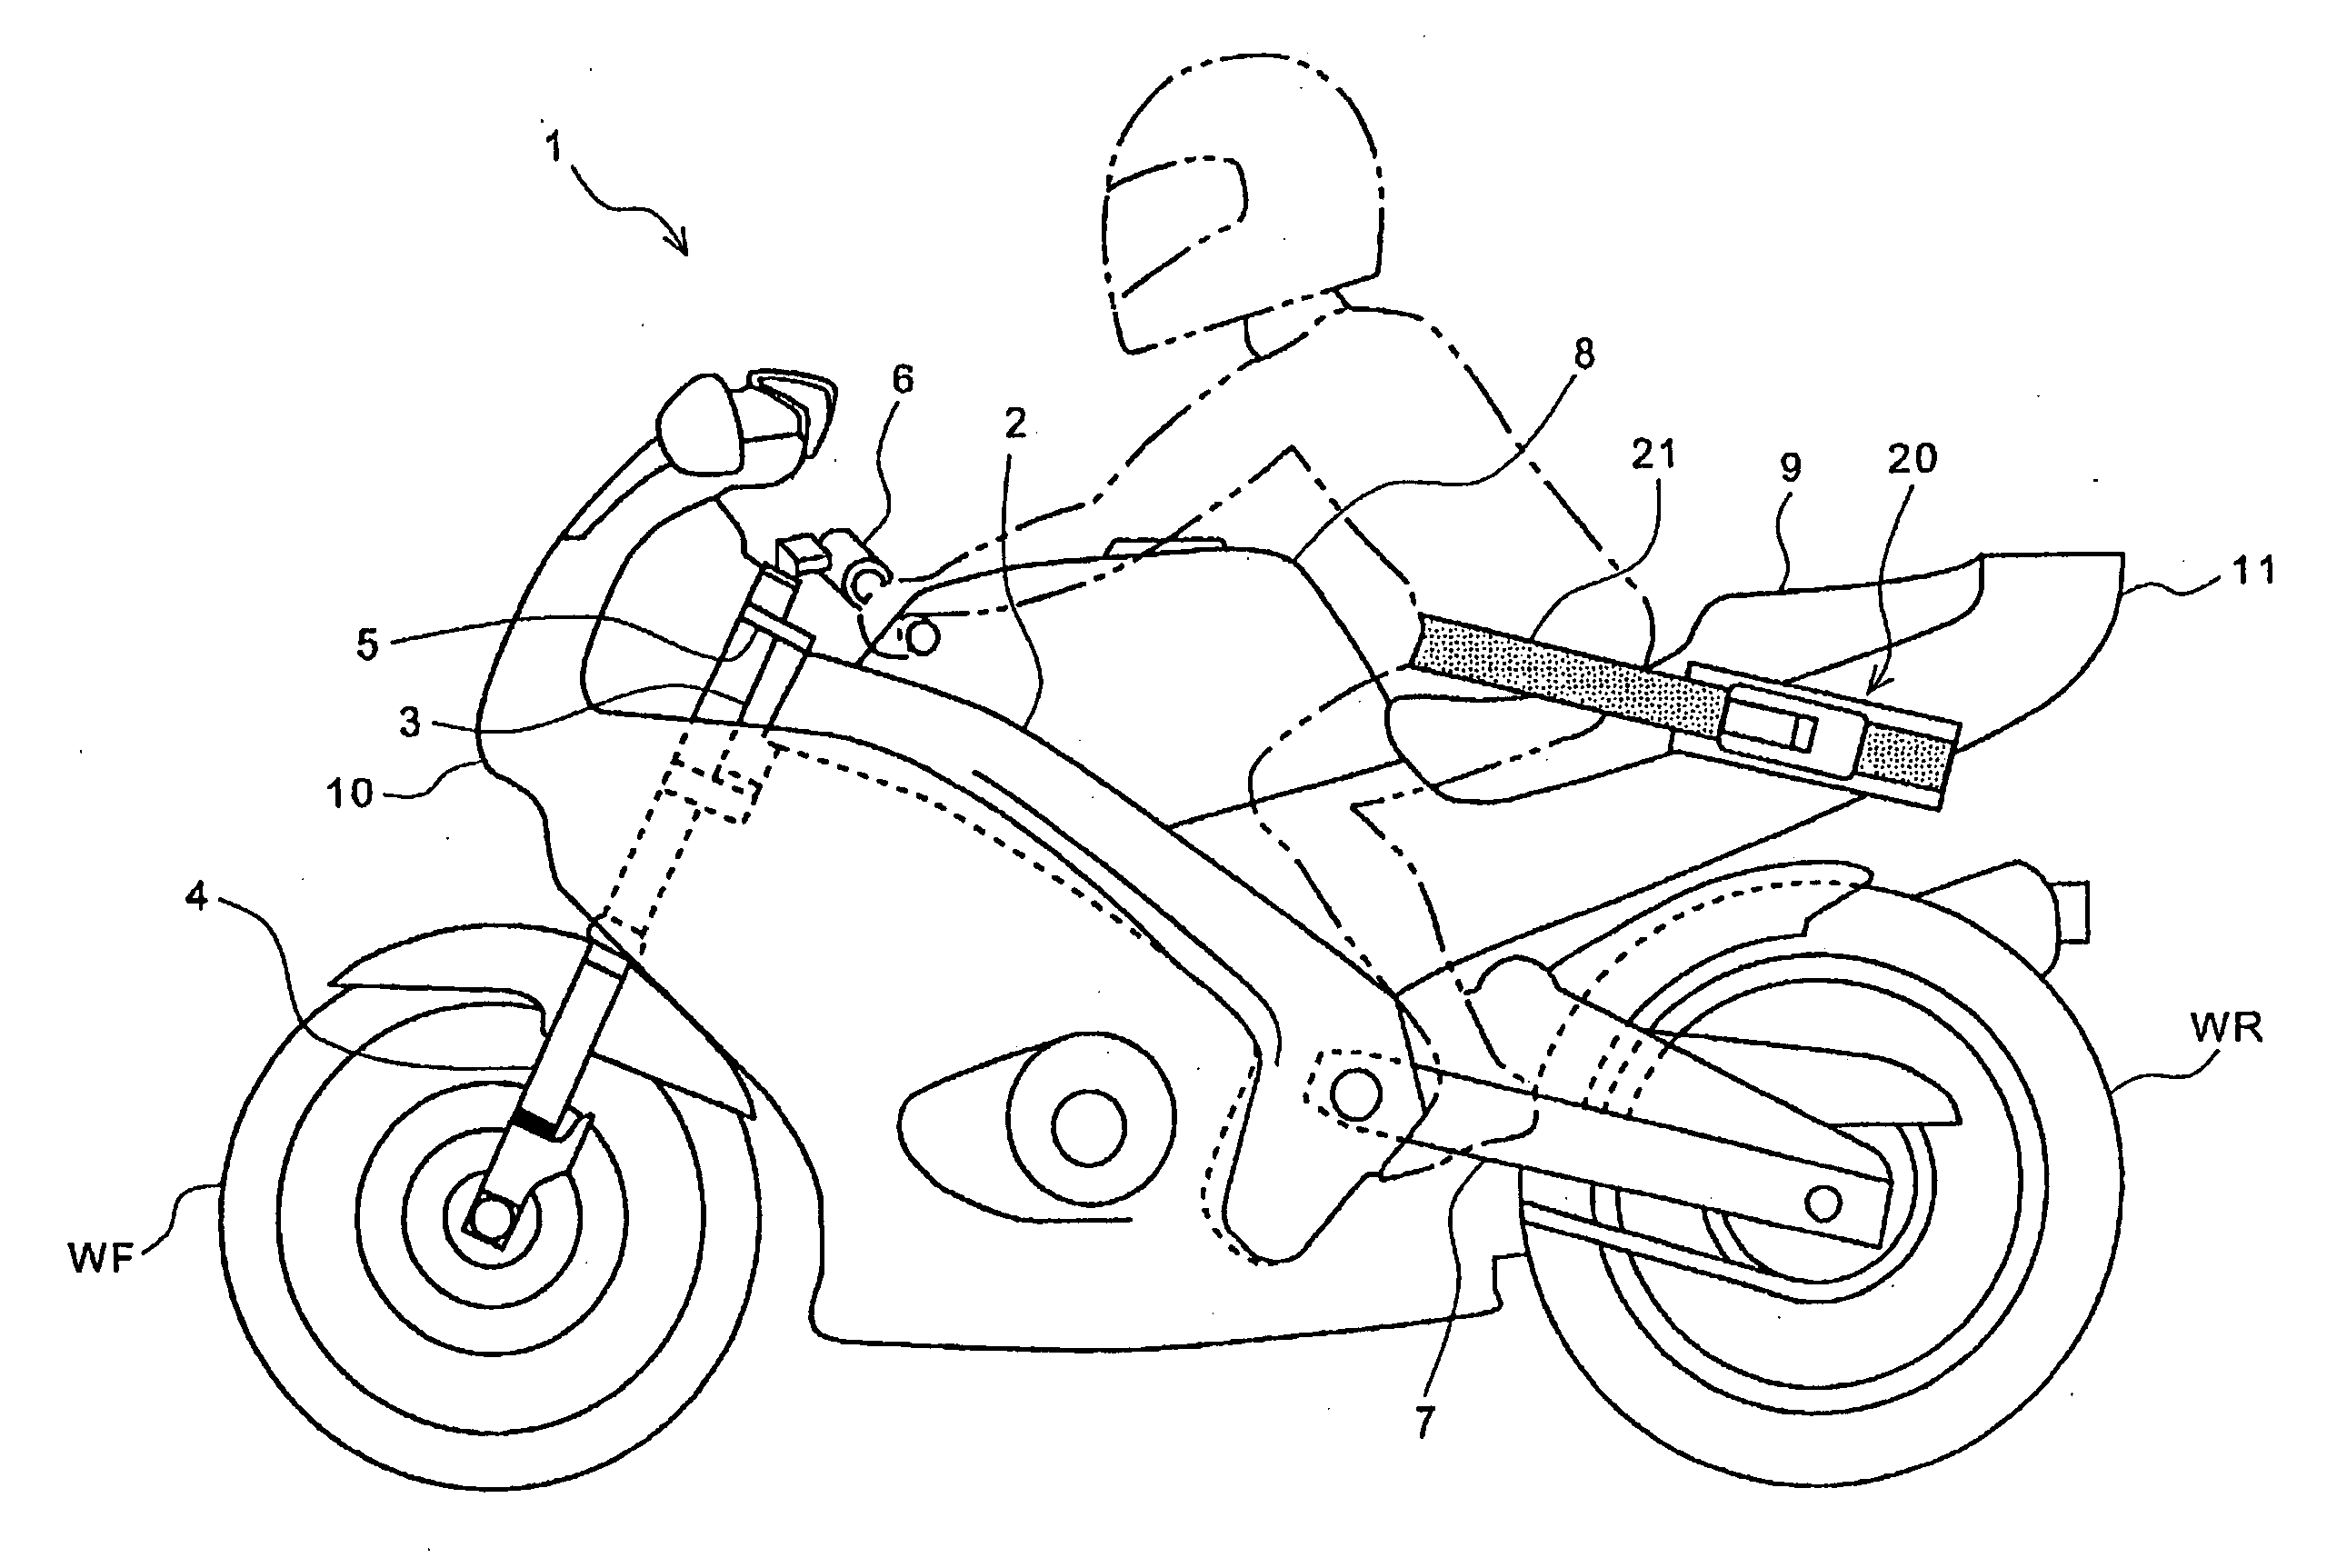 Rider restraint apparatus